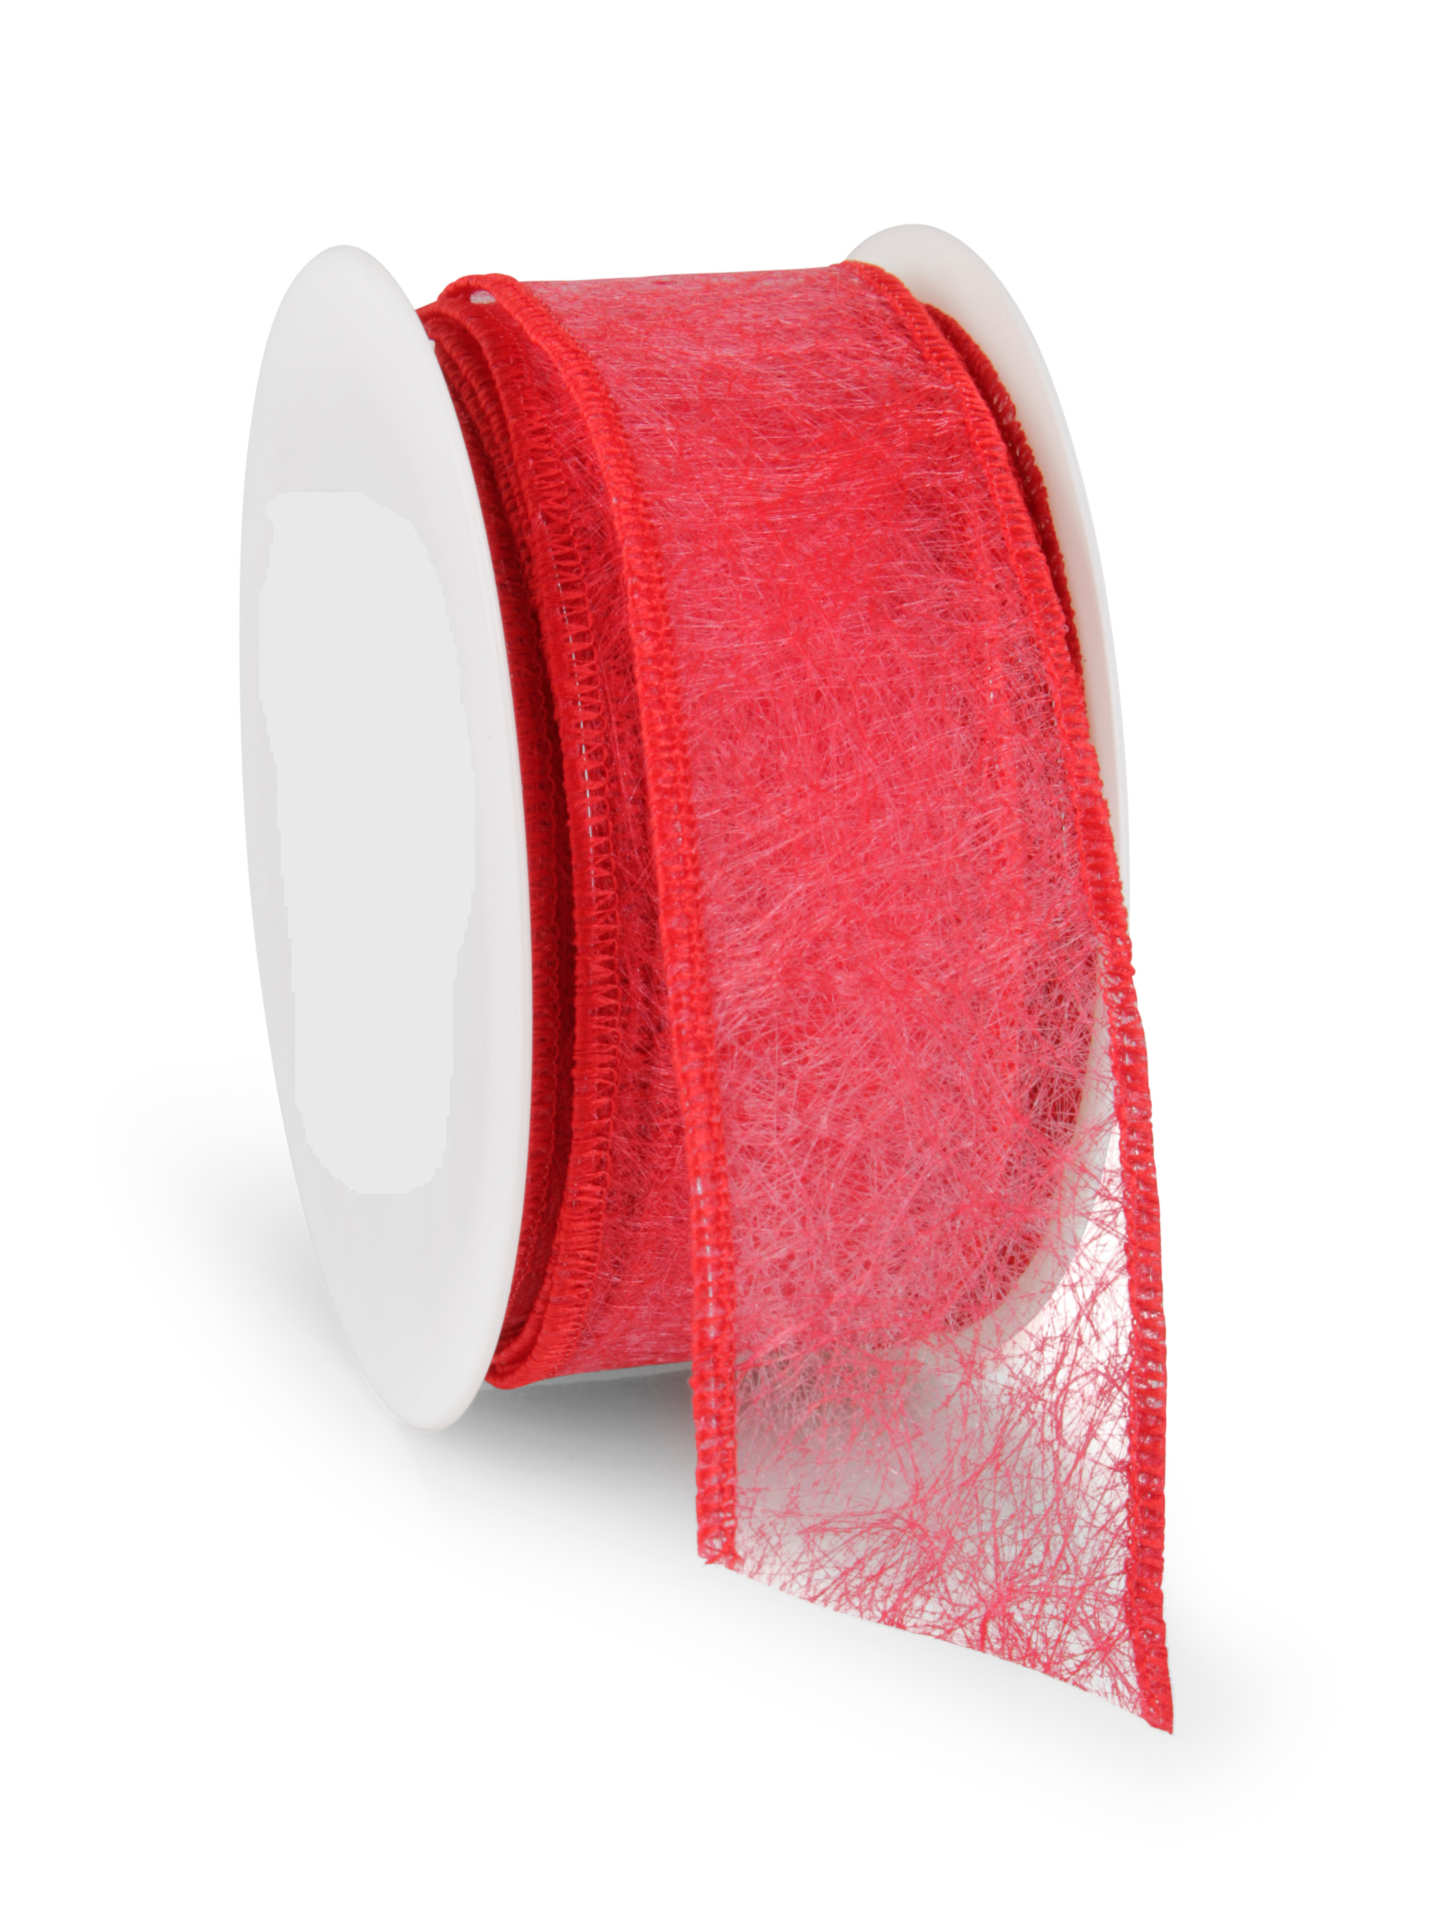 Wetterfestes Vliesband mit Drahtkante, rot, 60 mm breit - wetterfeste-baender